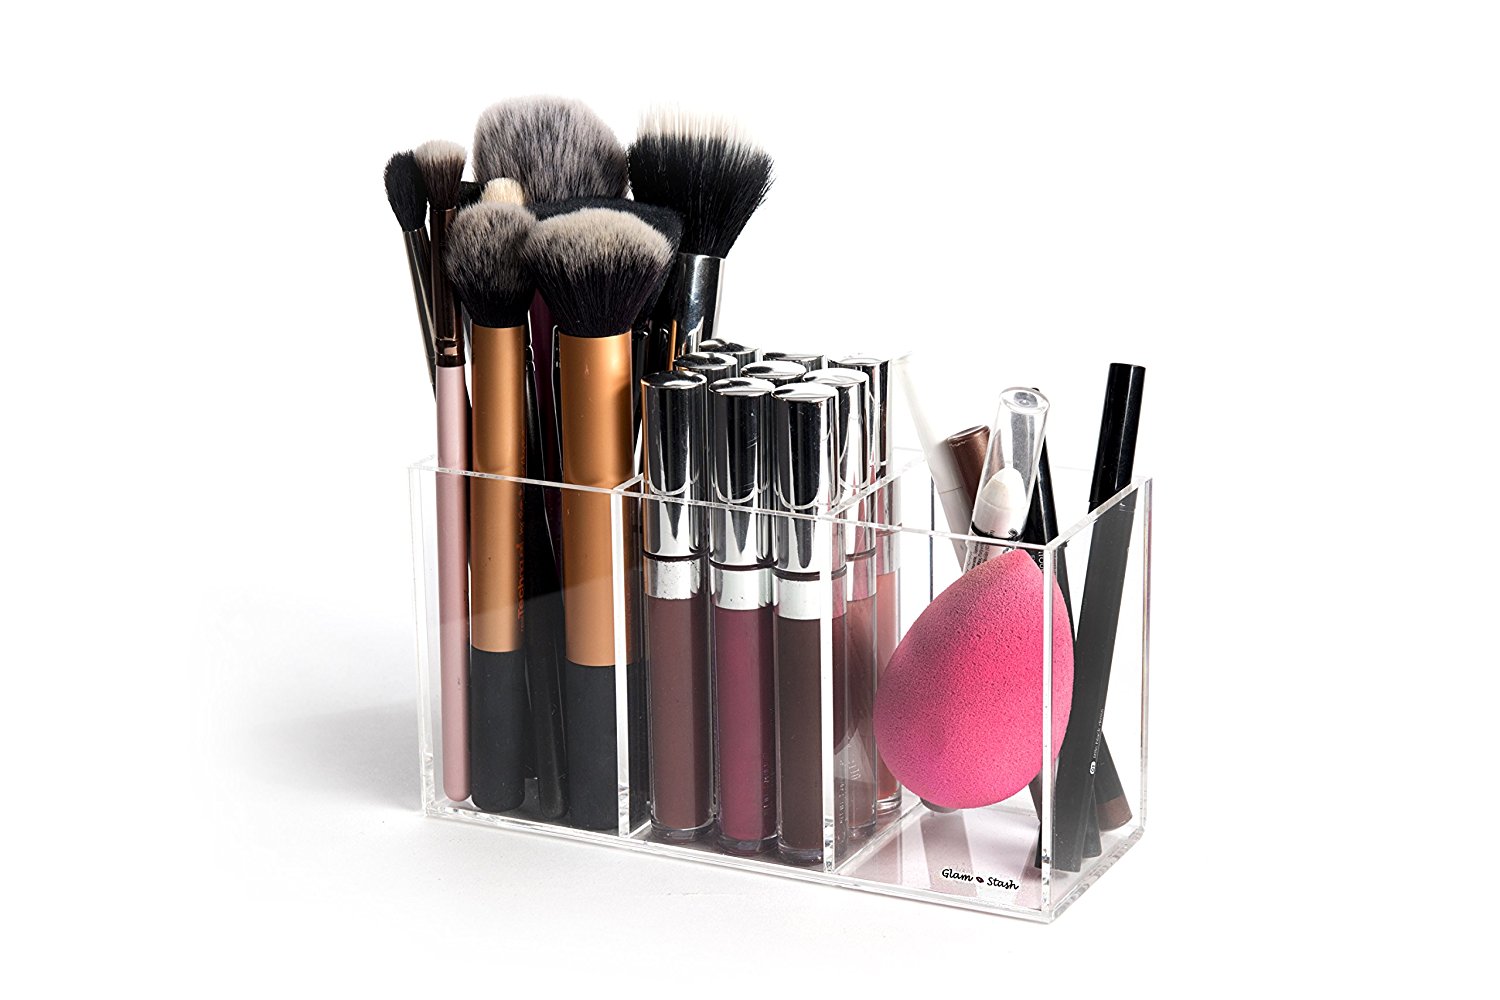 Acrylic makeup cosmetic organizer rack case